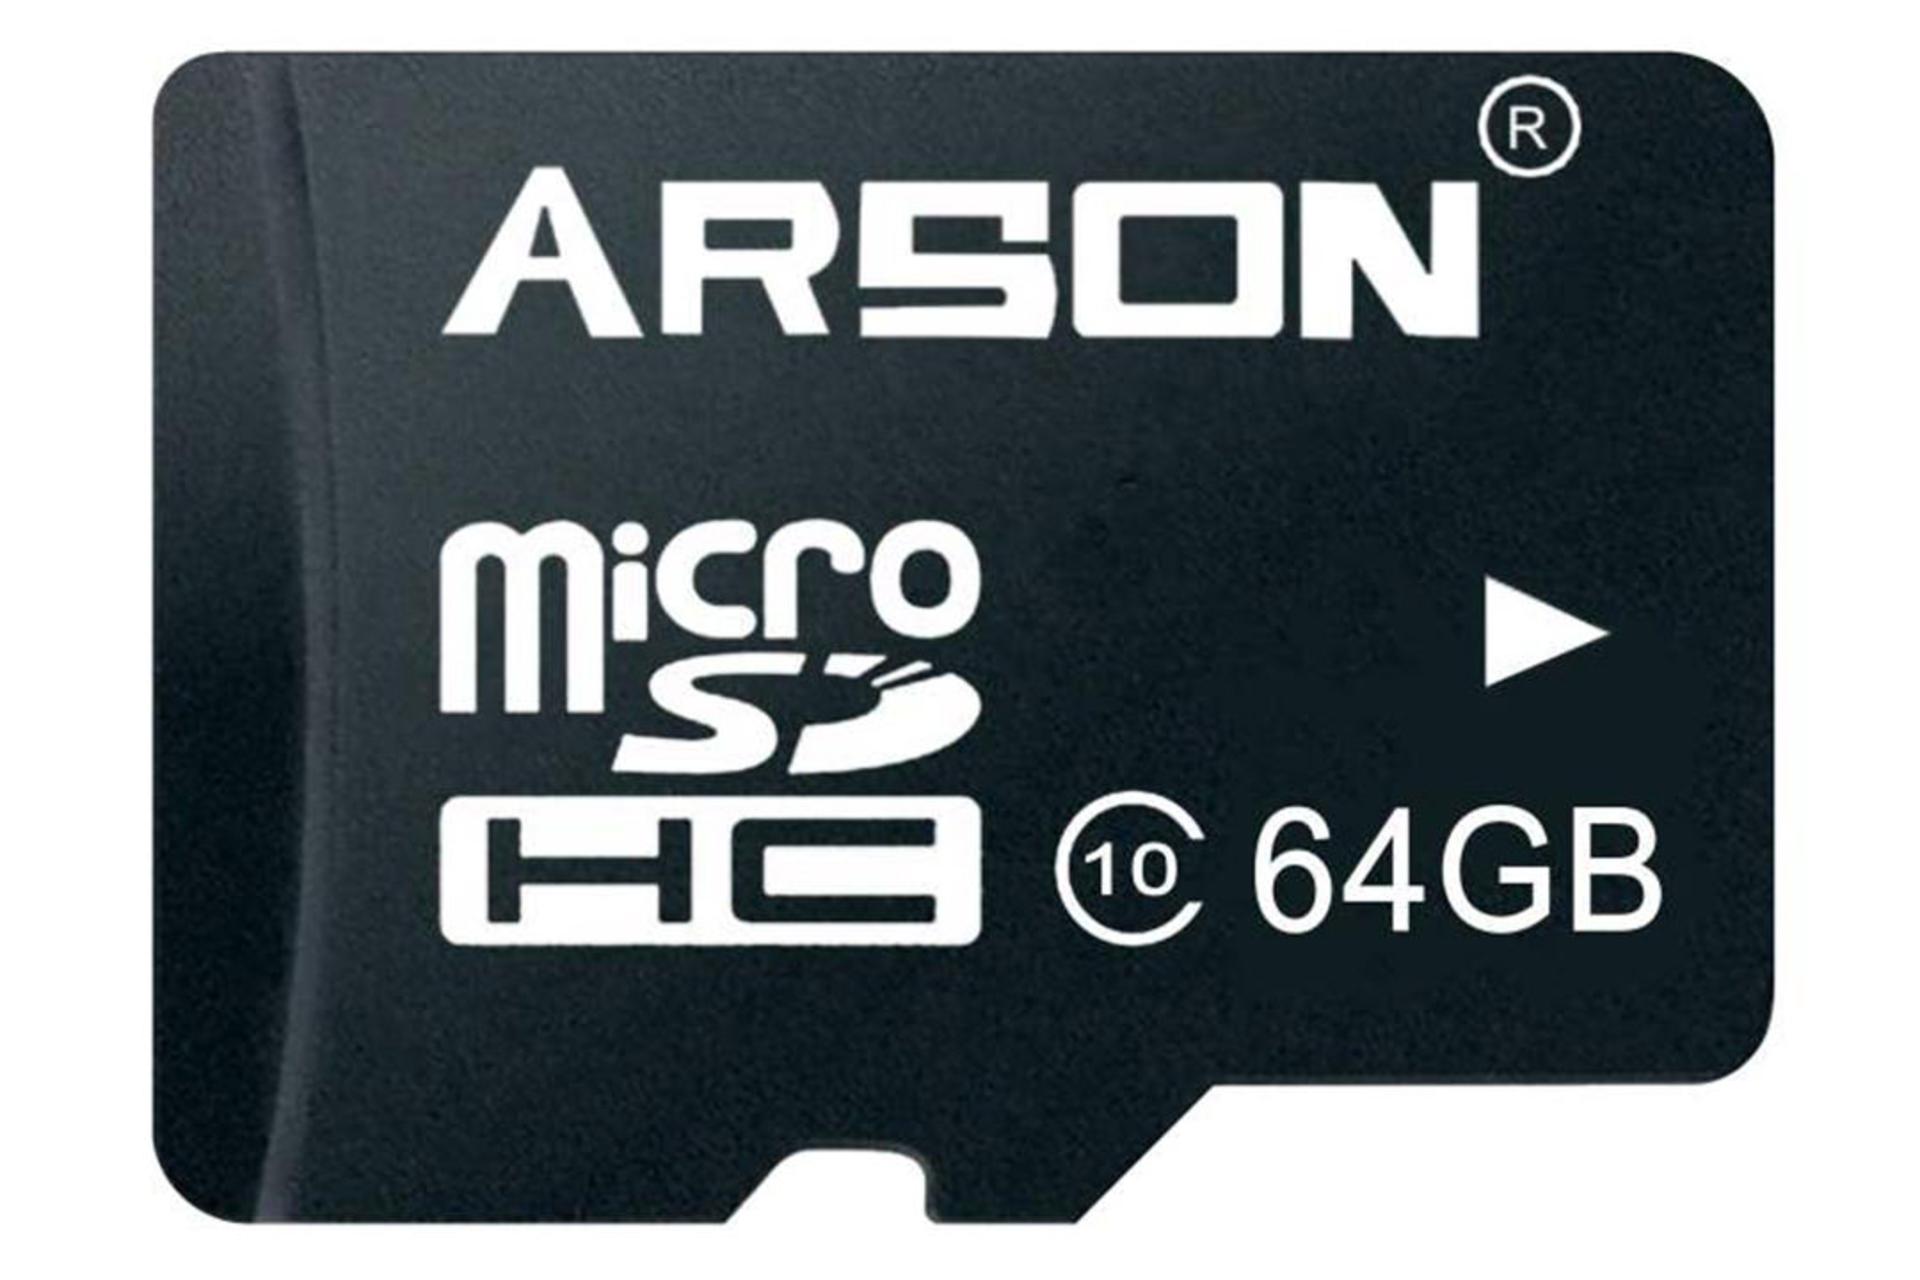 Arson AM-2164 microSDHC Class 10 64GB